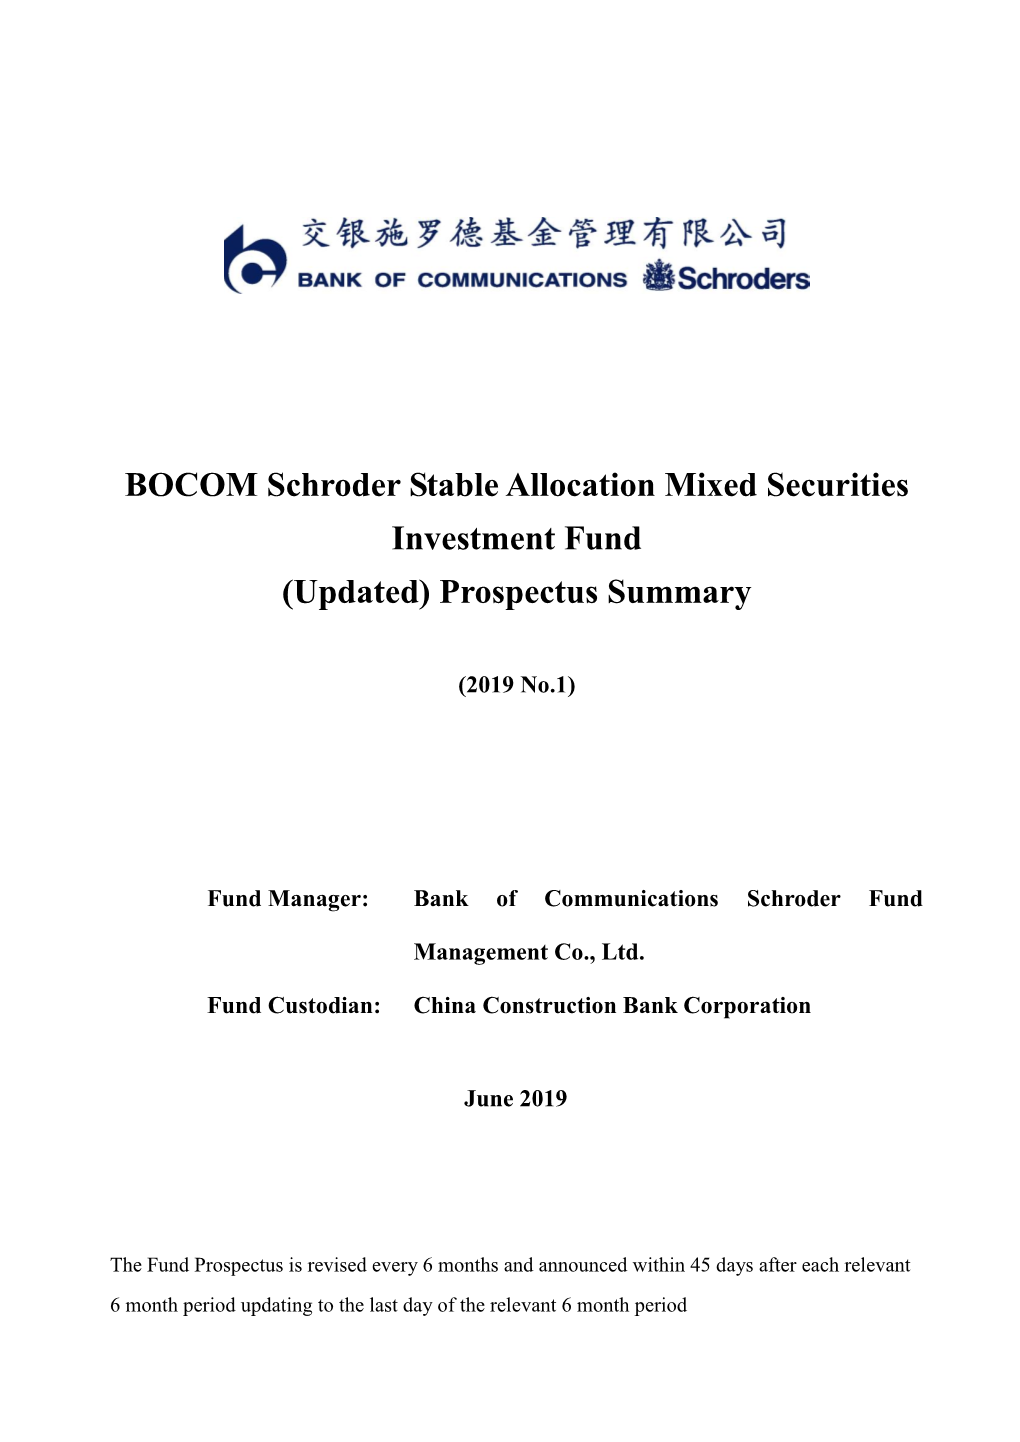 Prospectus Summary of BOCOM Schroder Stable Allocation Mixed